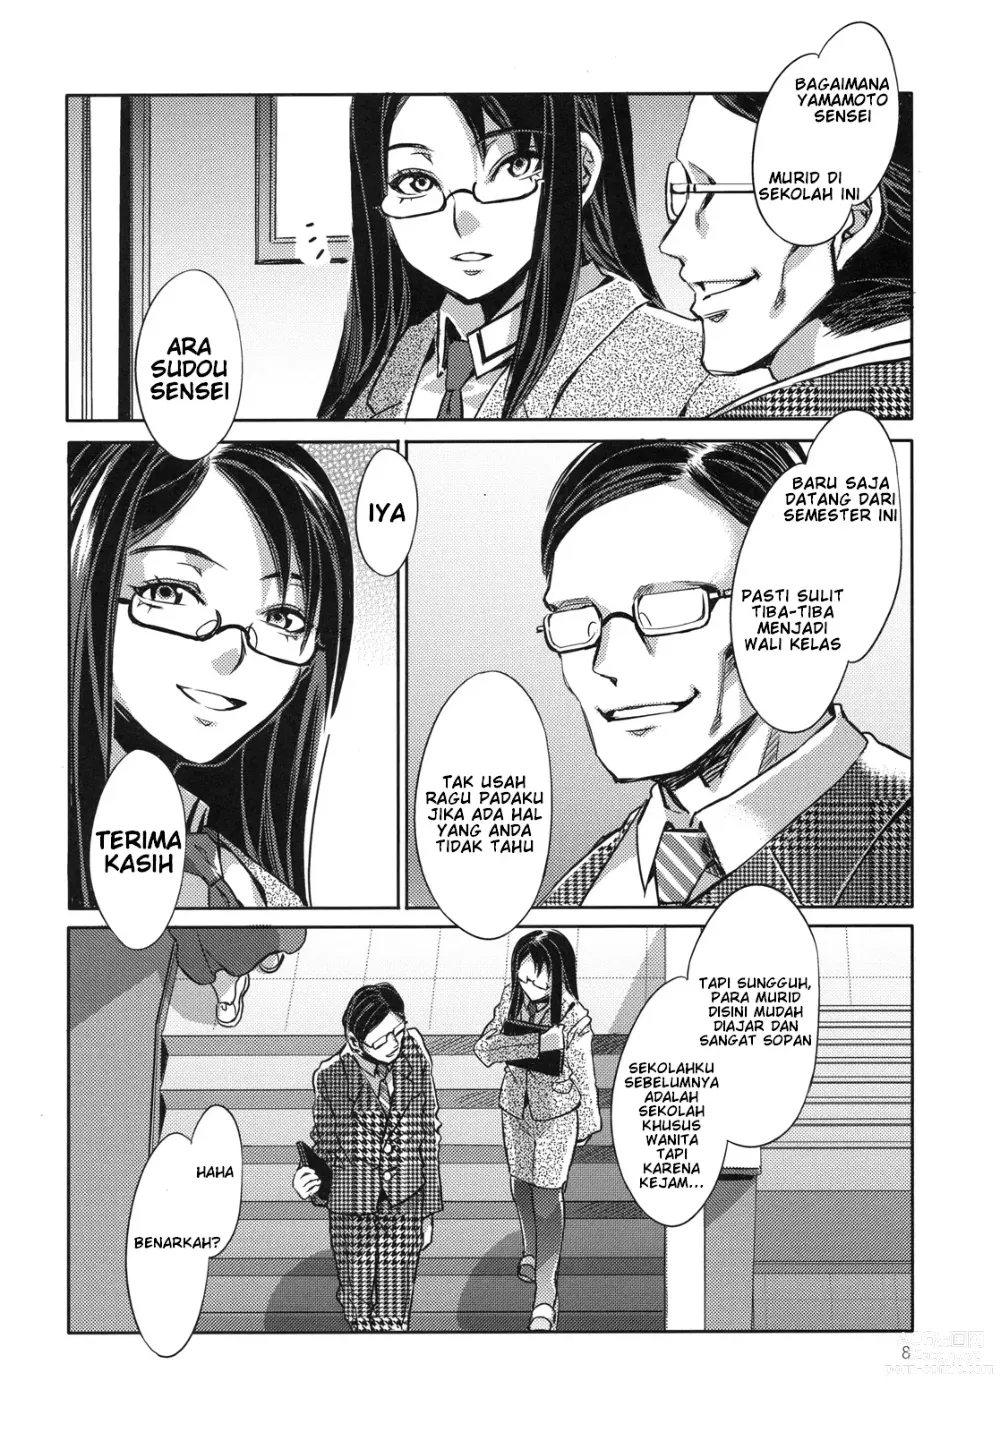 Page 7 of doujinshi Sekolah MC Periode Pertama